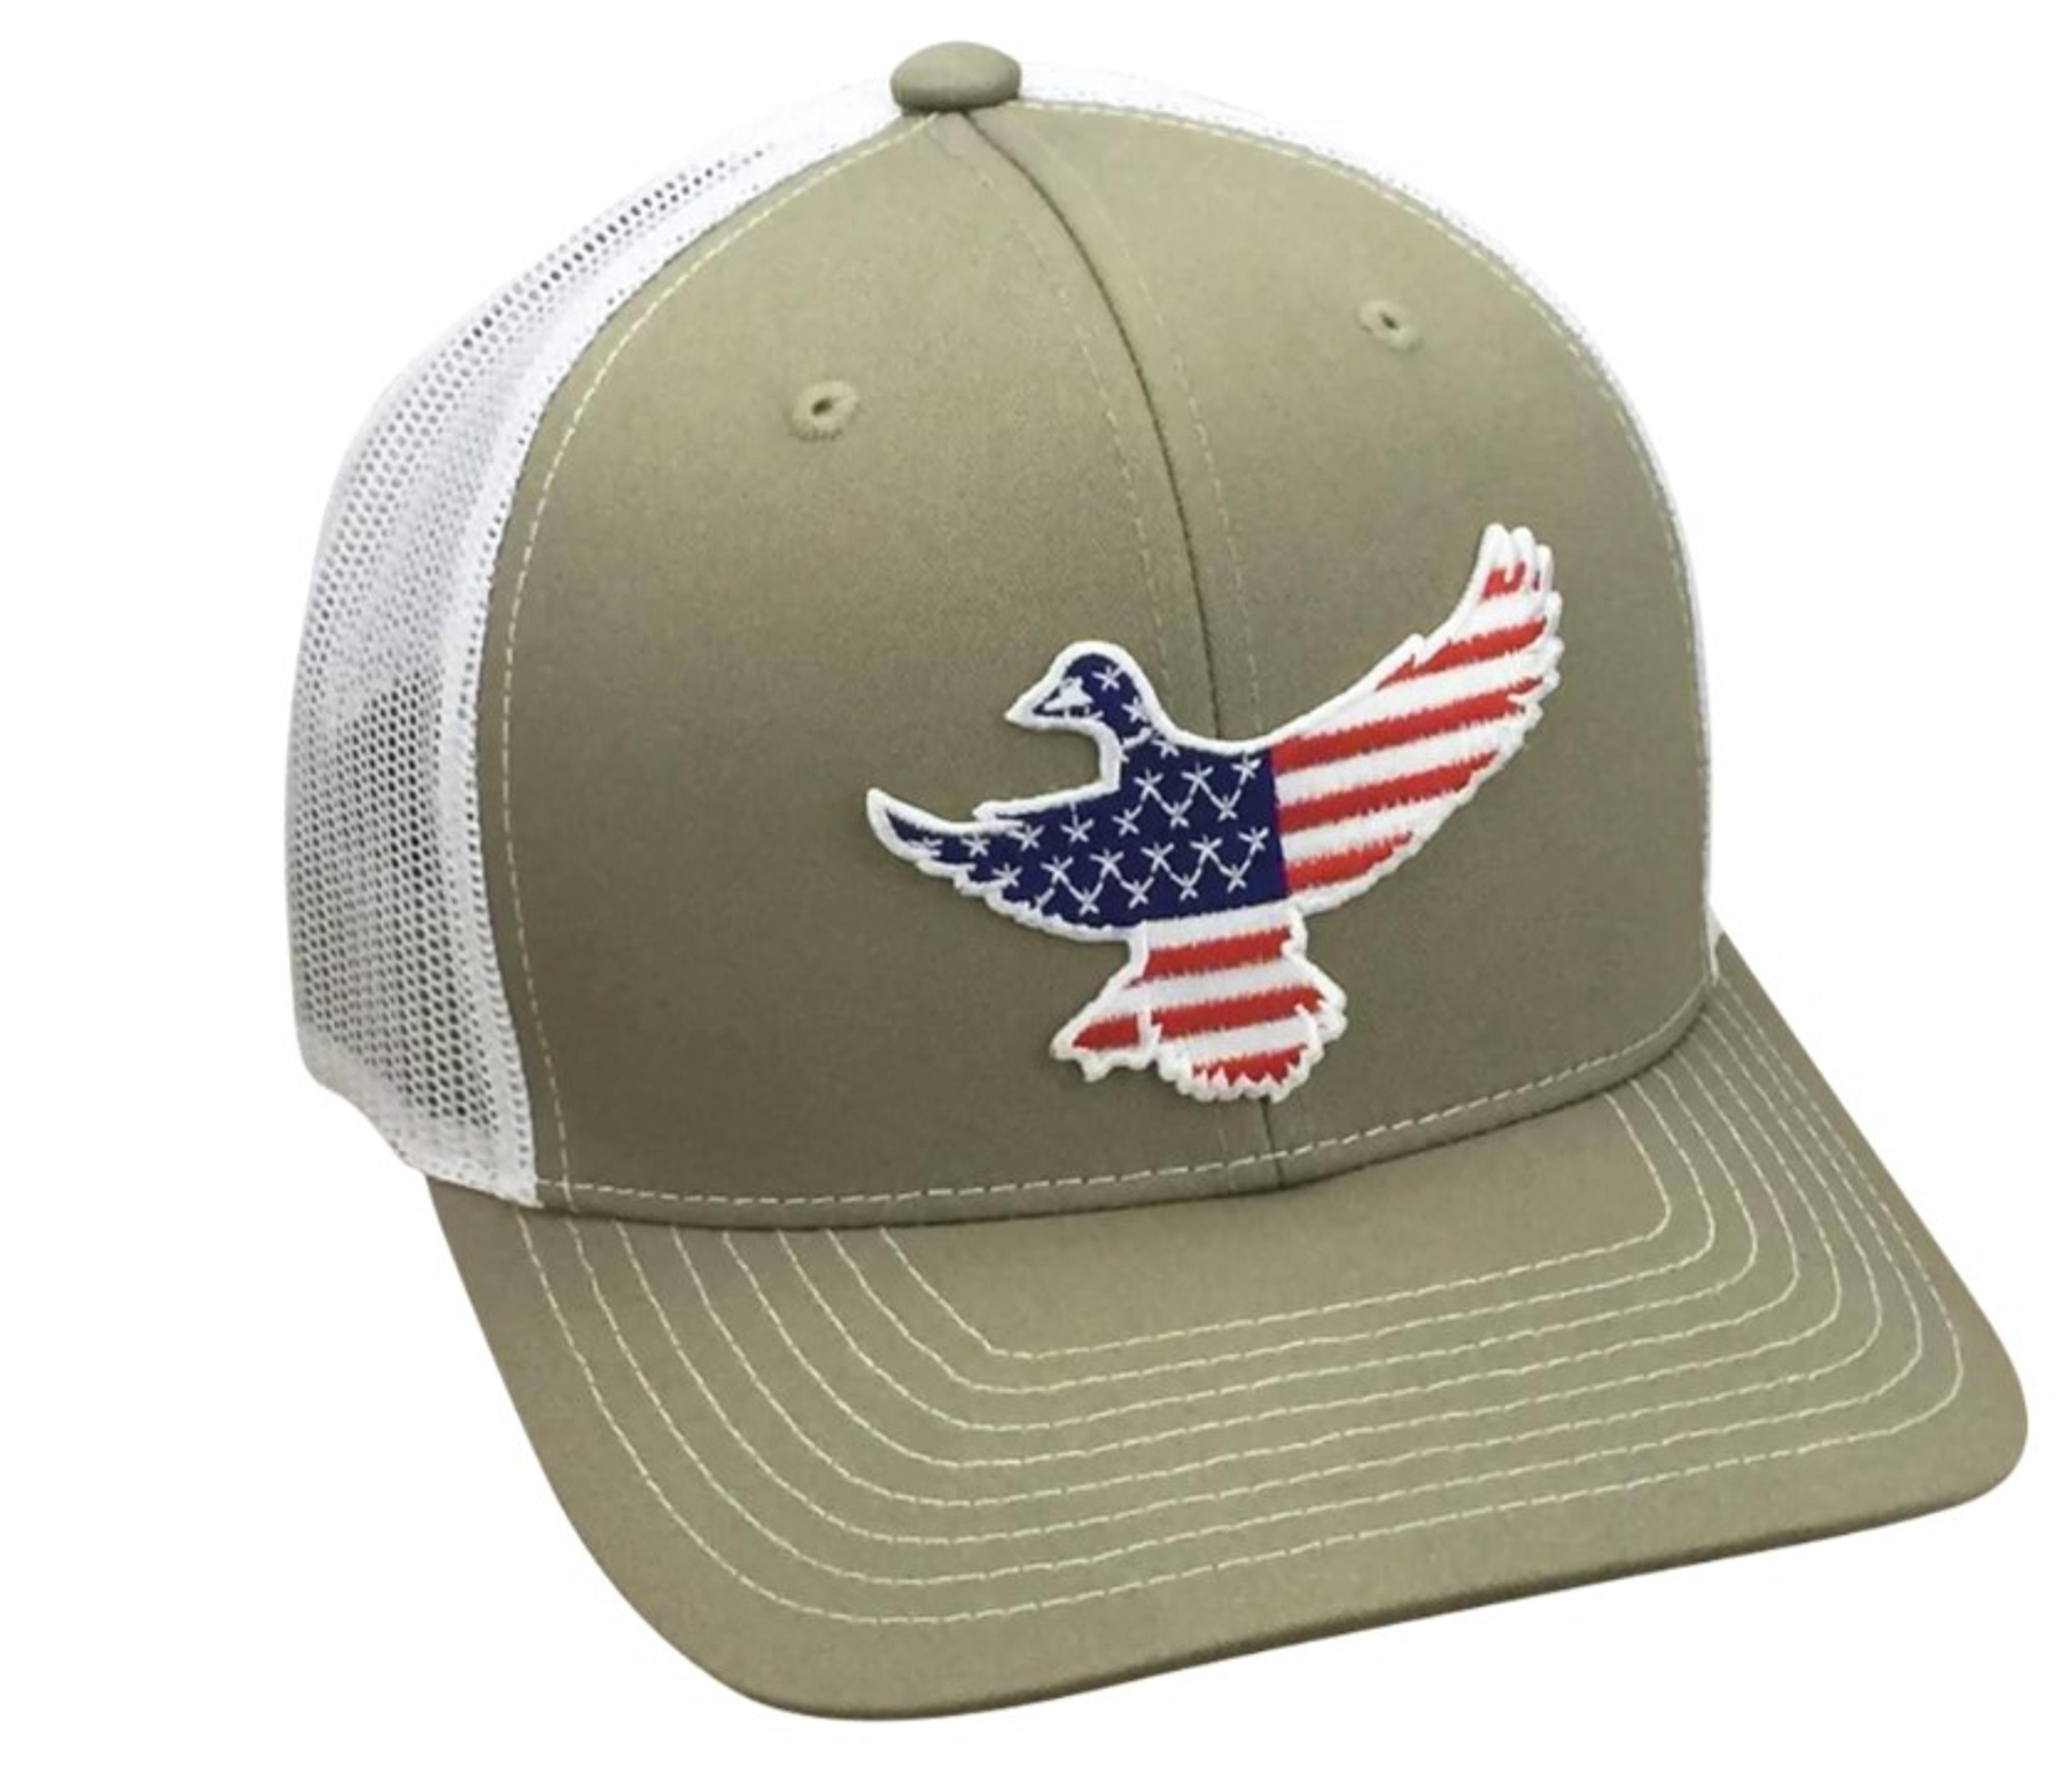  American Mallard Trucker Hat